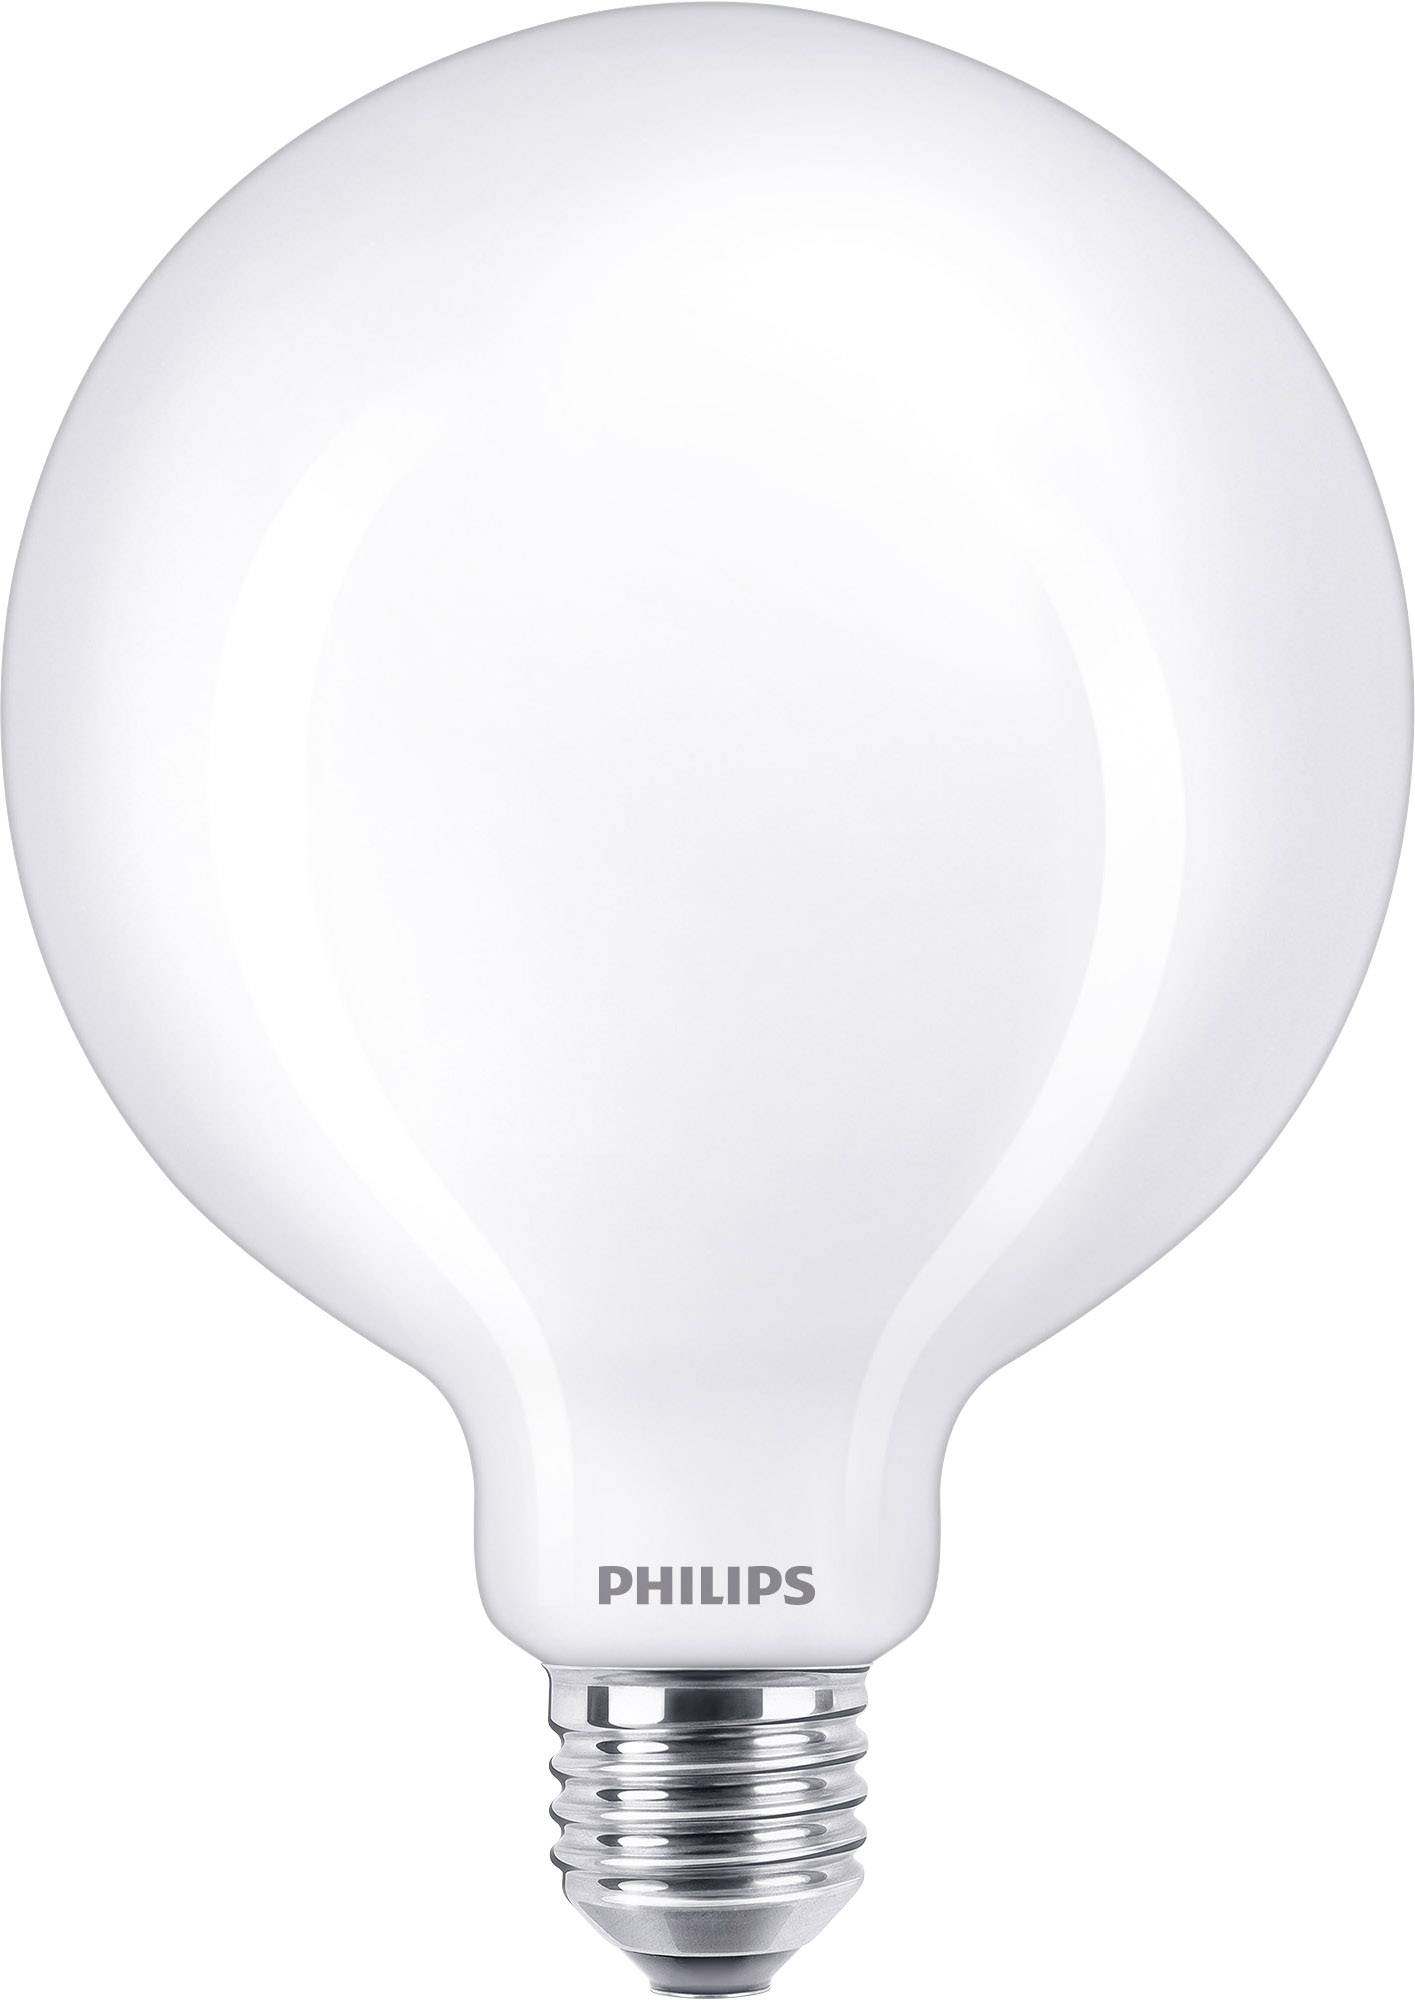 PHILIPS LED Lampe ersetzt 80 Watt HPL-N Osram HQL usw Birne Leuchte Mast E27 830 